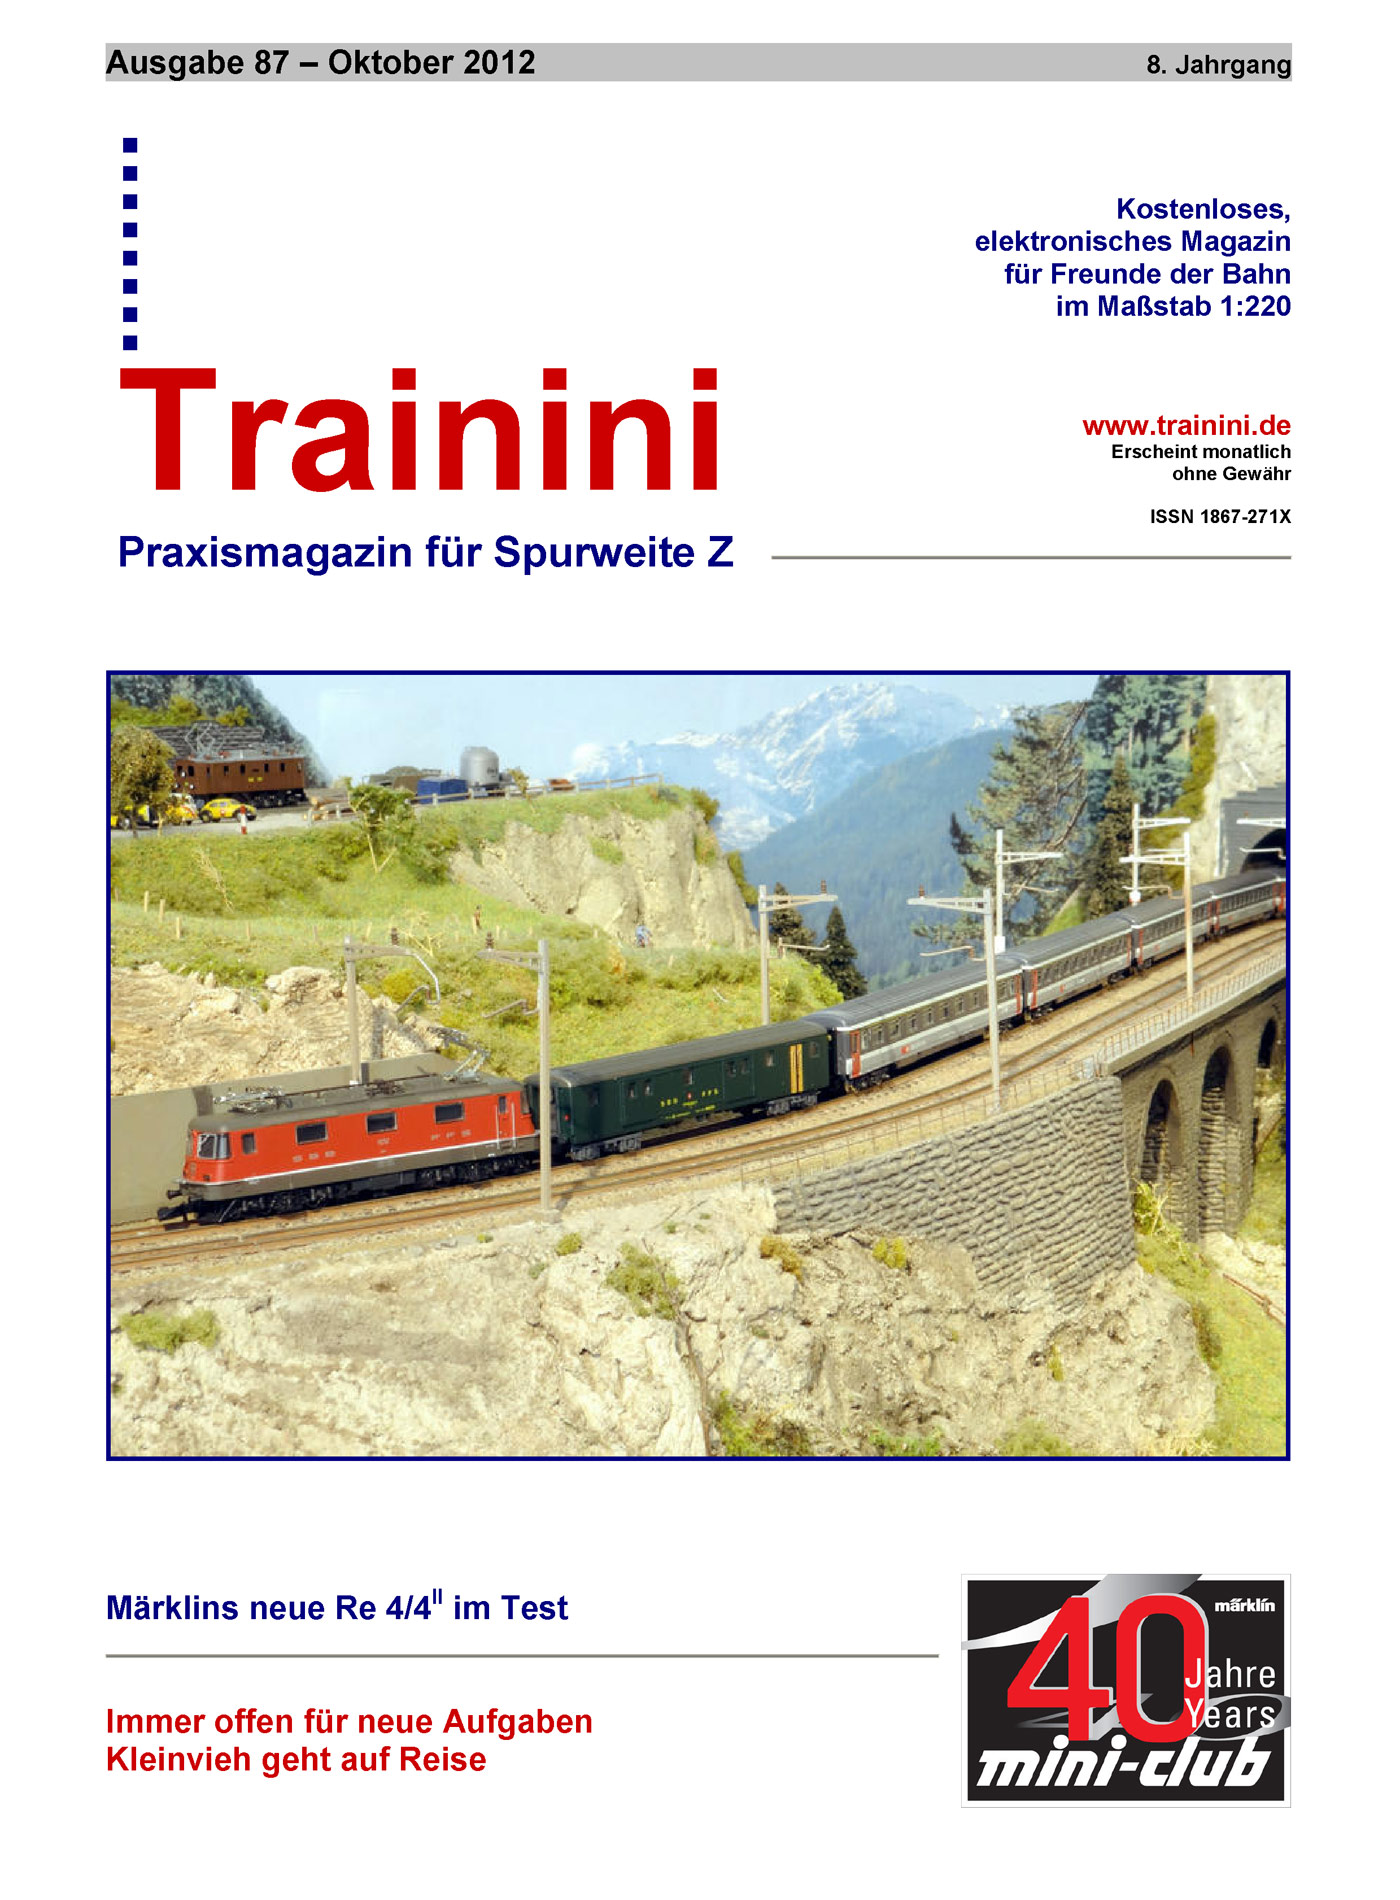 Trainini Ausgabe Oktober 2012